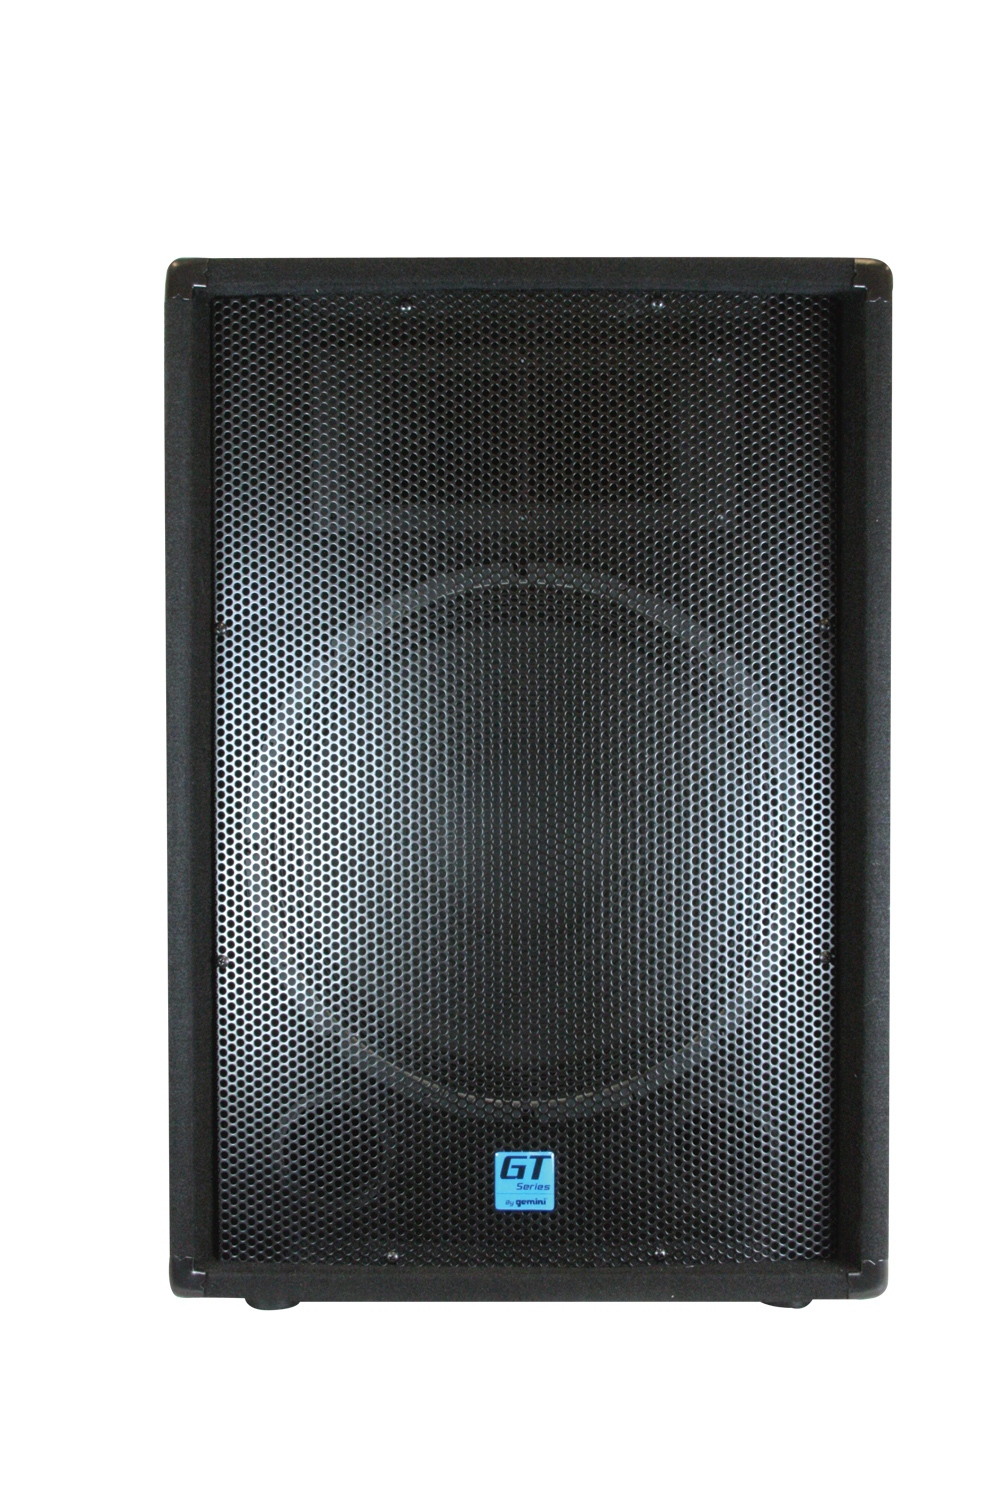 Gemini GT-1504 15" Speaker Front